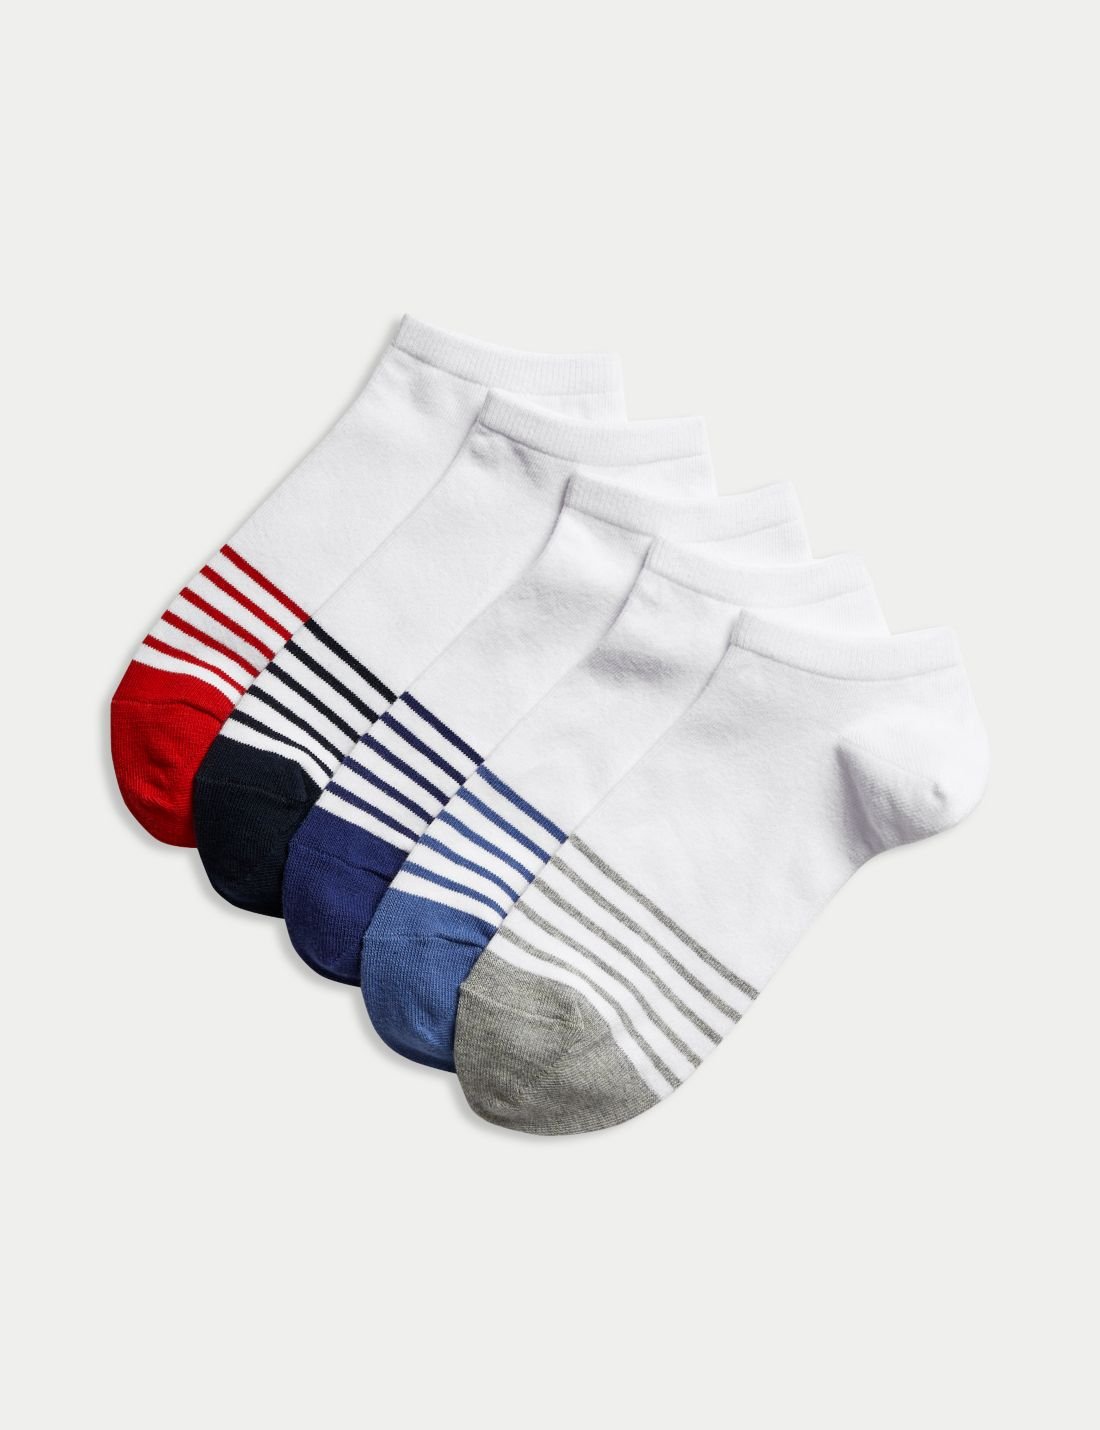 5'li Cool & Fresh:trade_mark: Spor Çorabı Seti